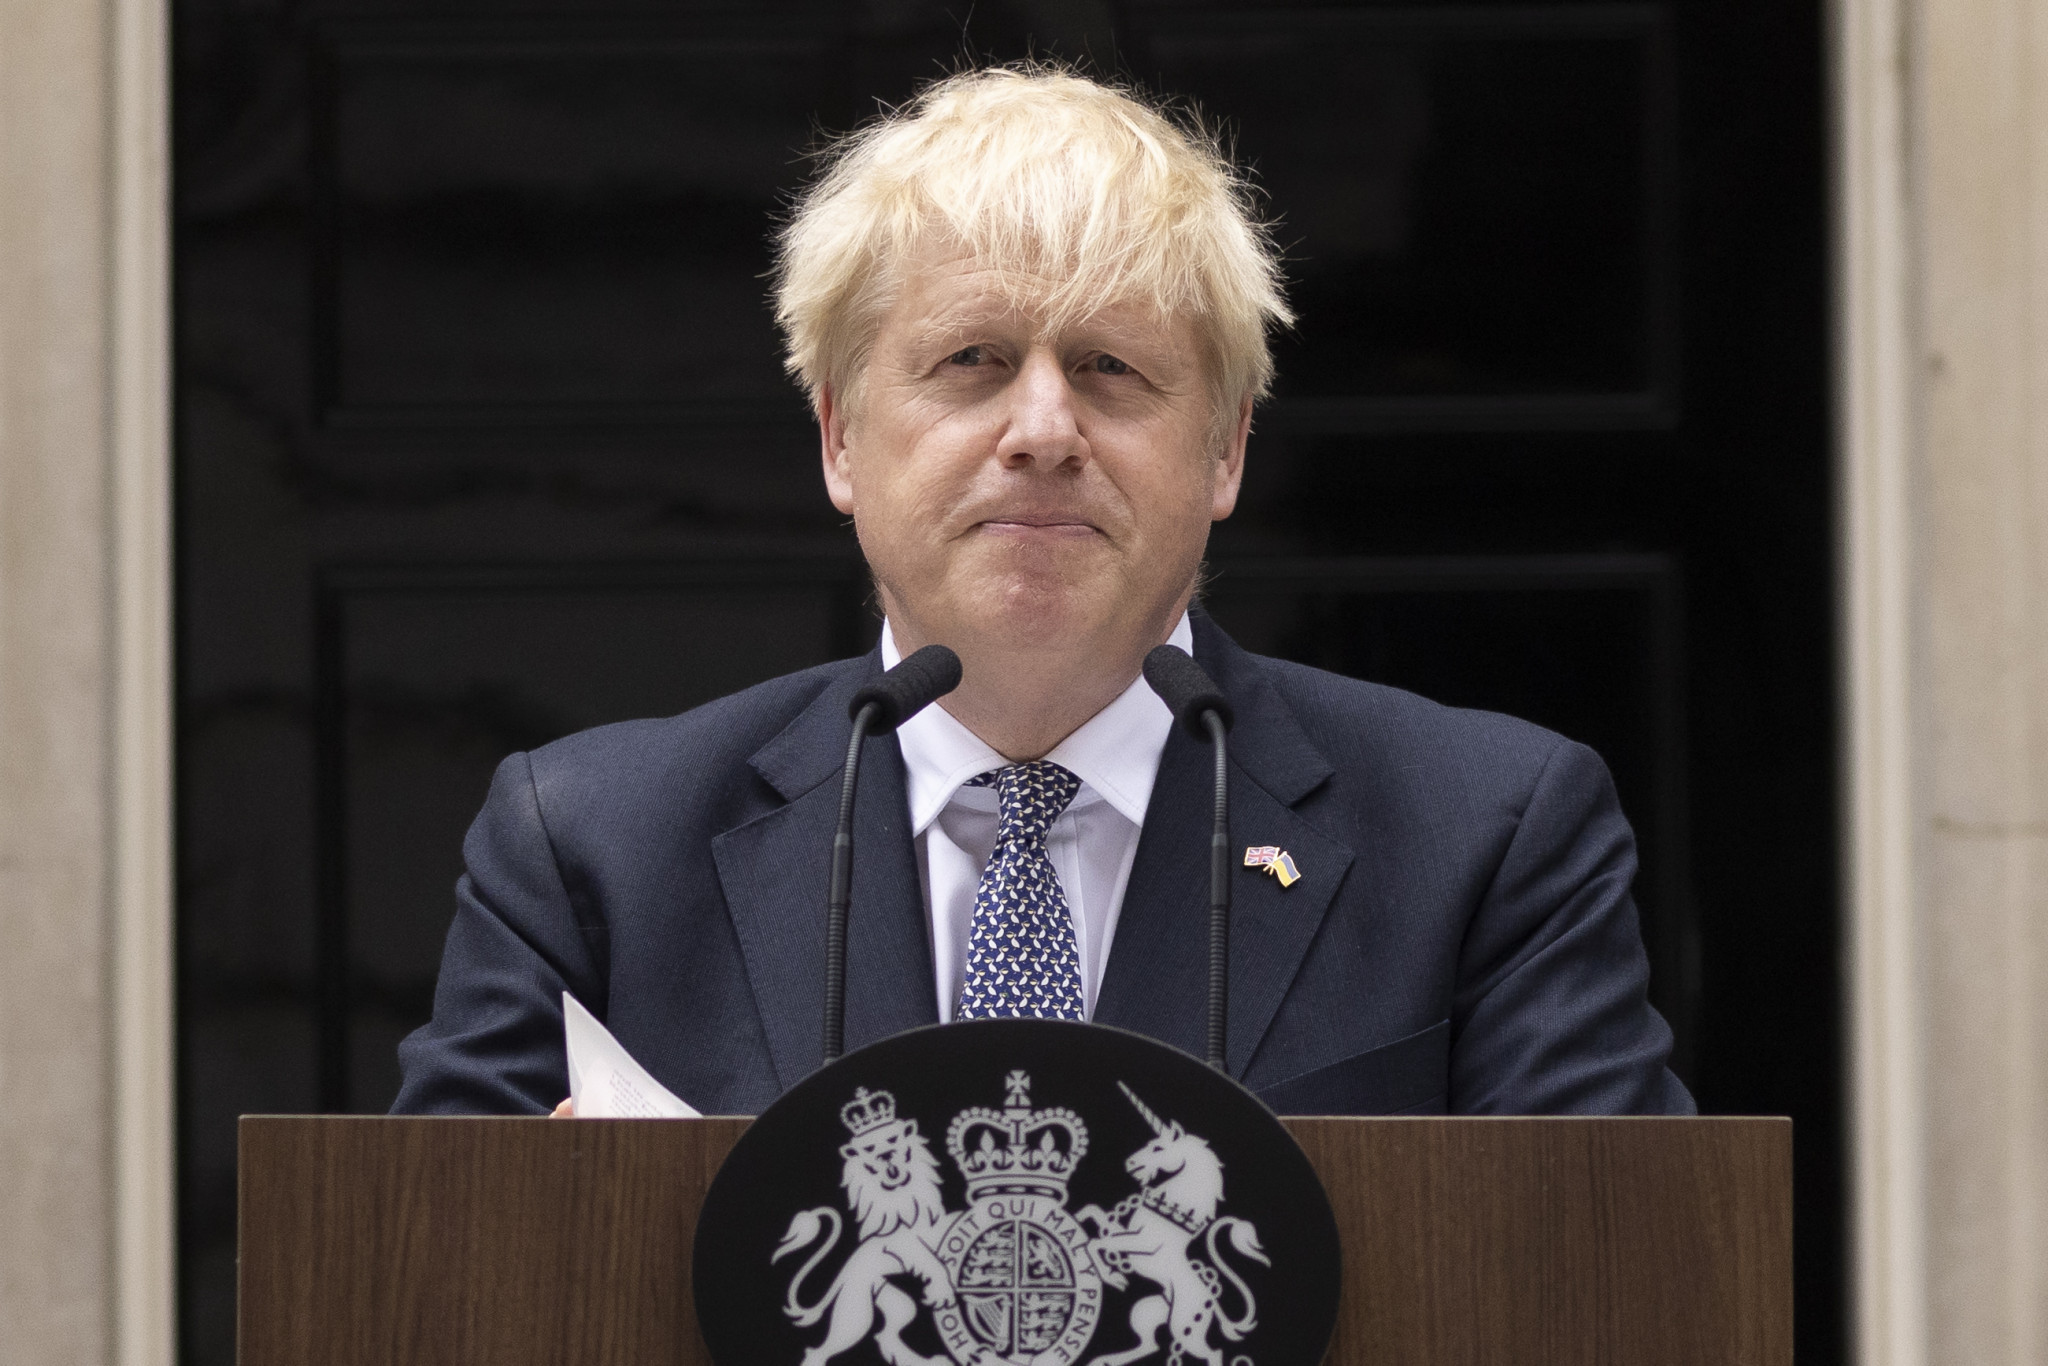 Exclusive: UK Prime Minister Johnson set to miss Birmingham 2022 Opening Ceremony